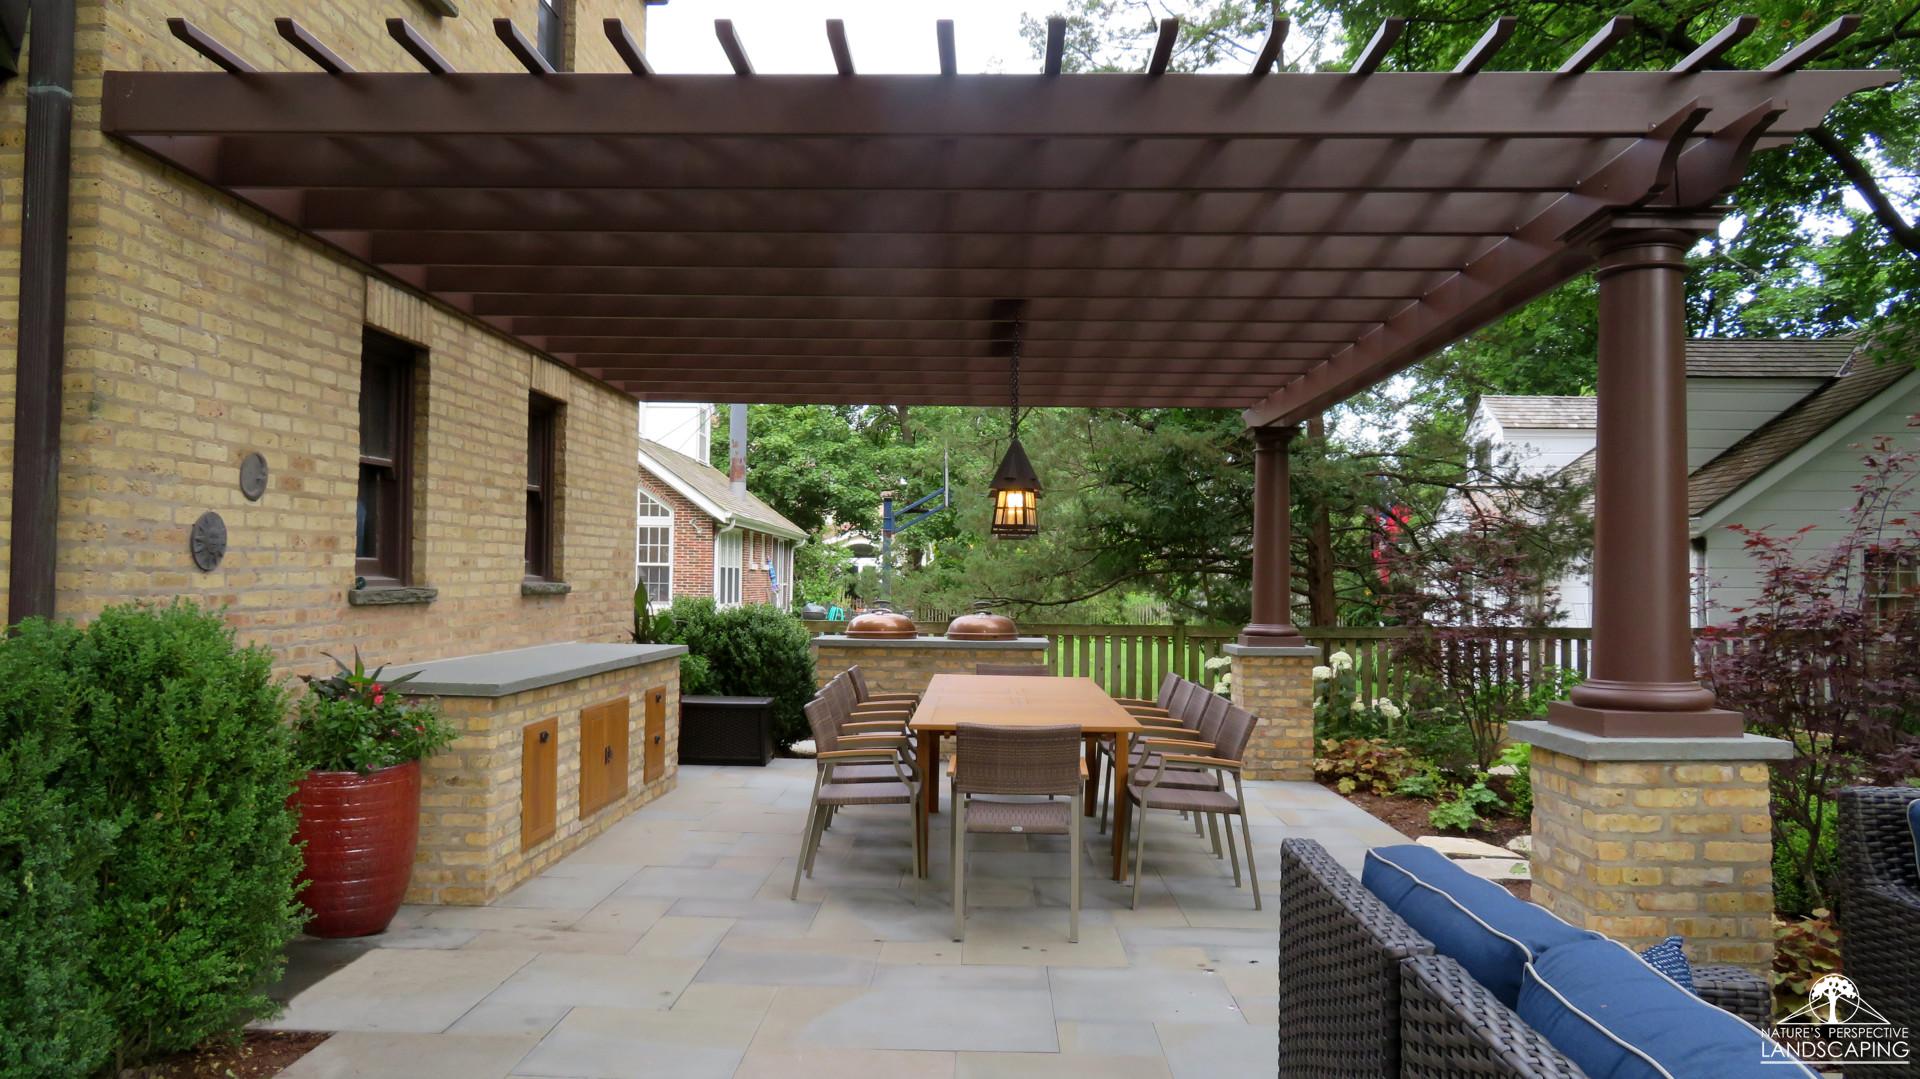 large fiberglass pergola outdoor kitchen and bluestone patio